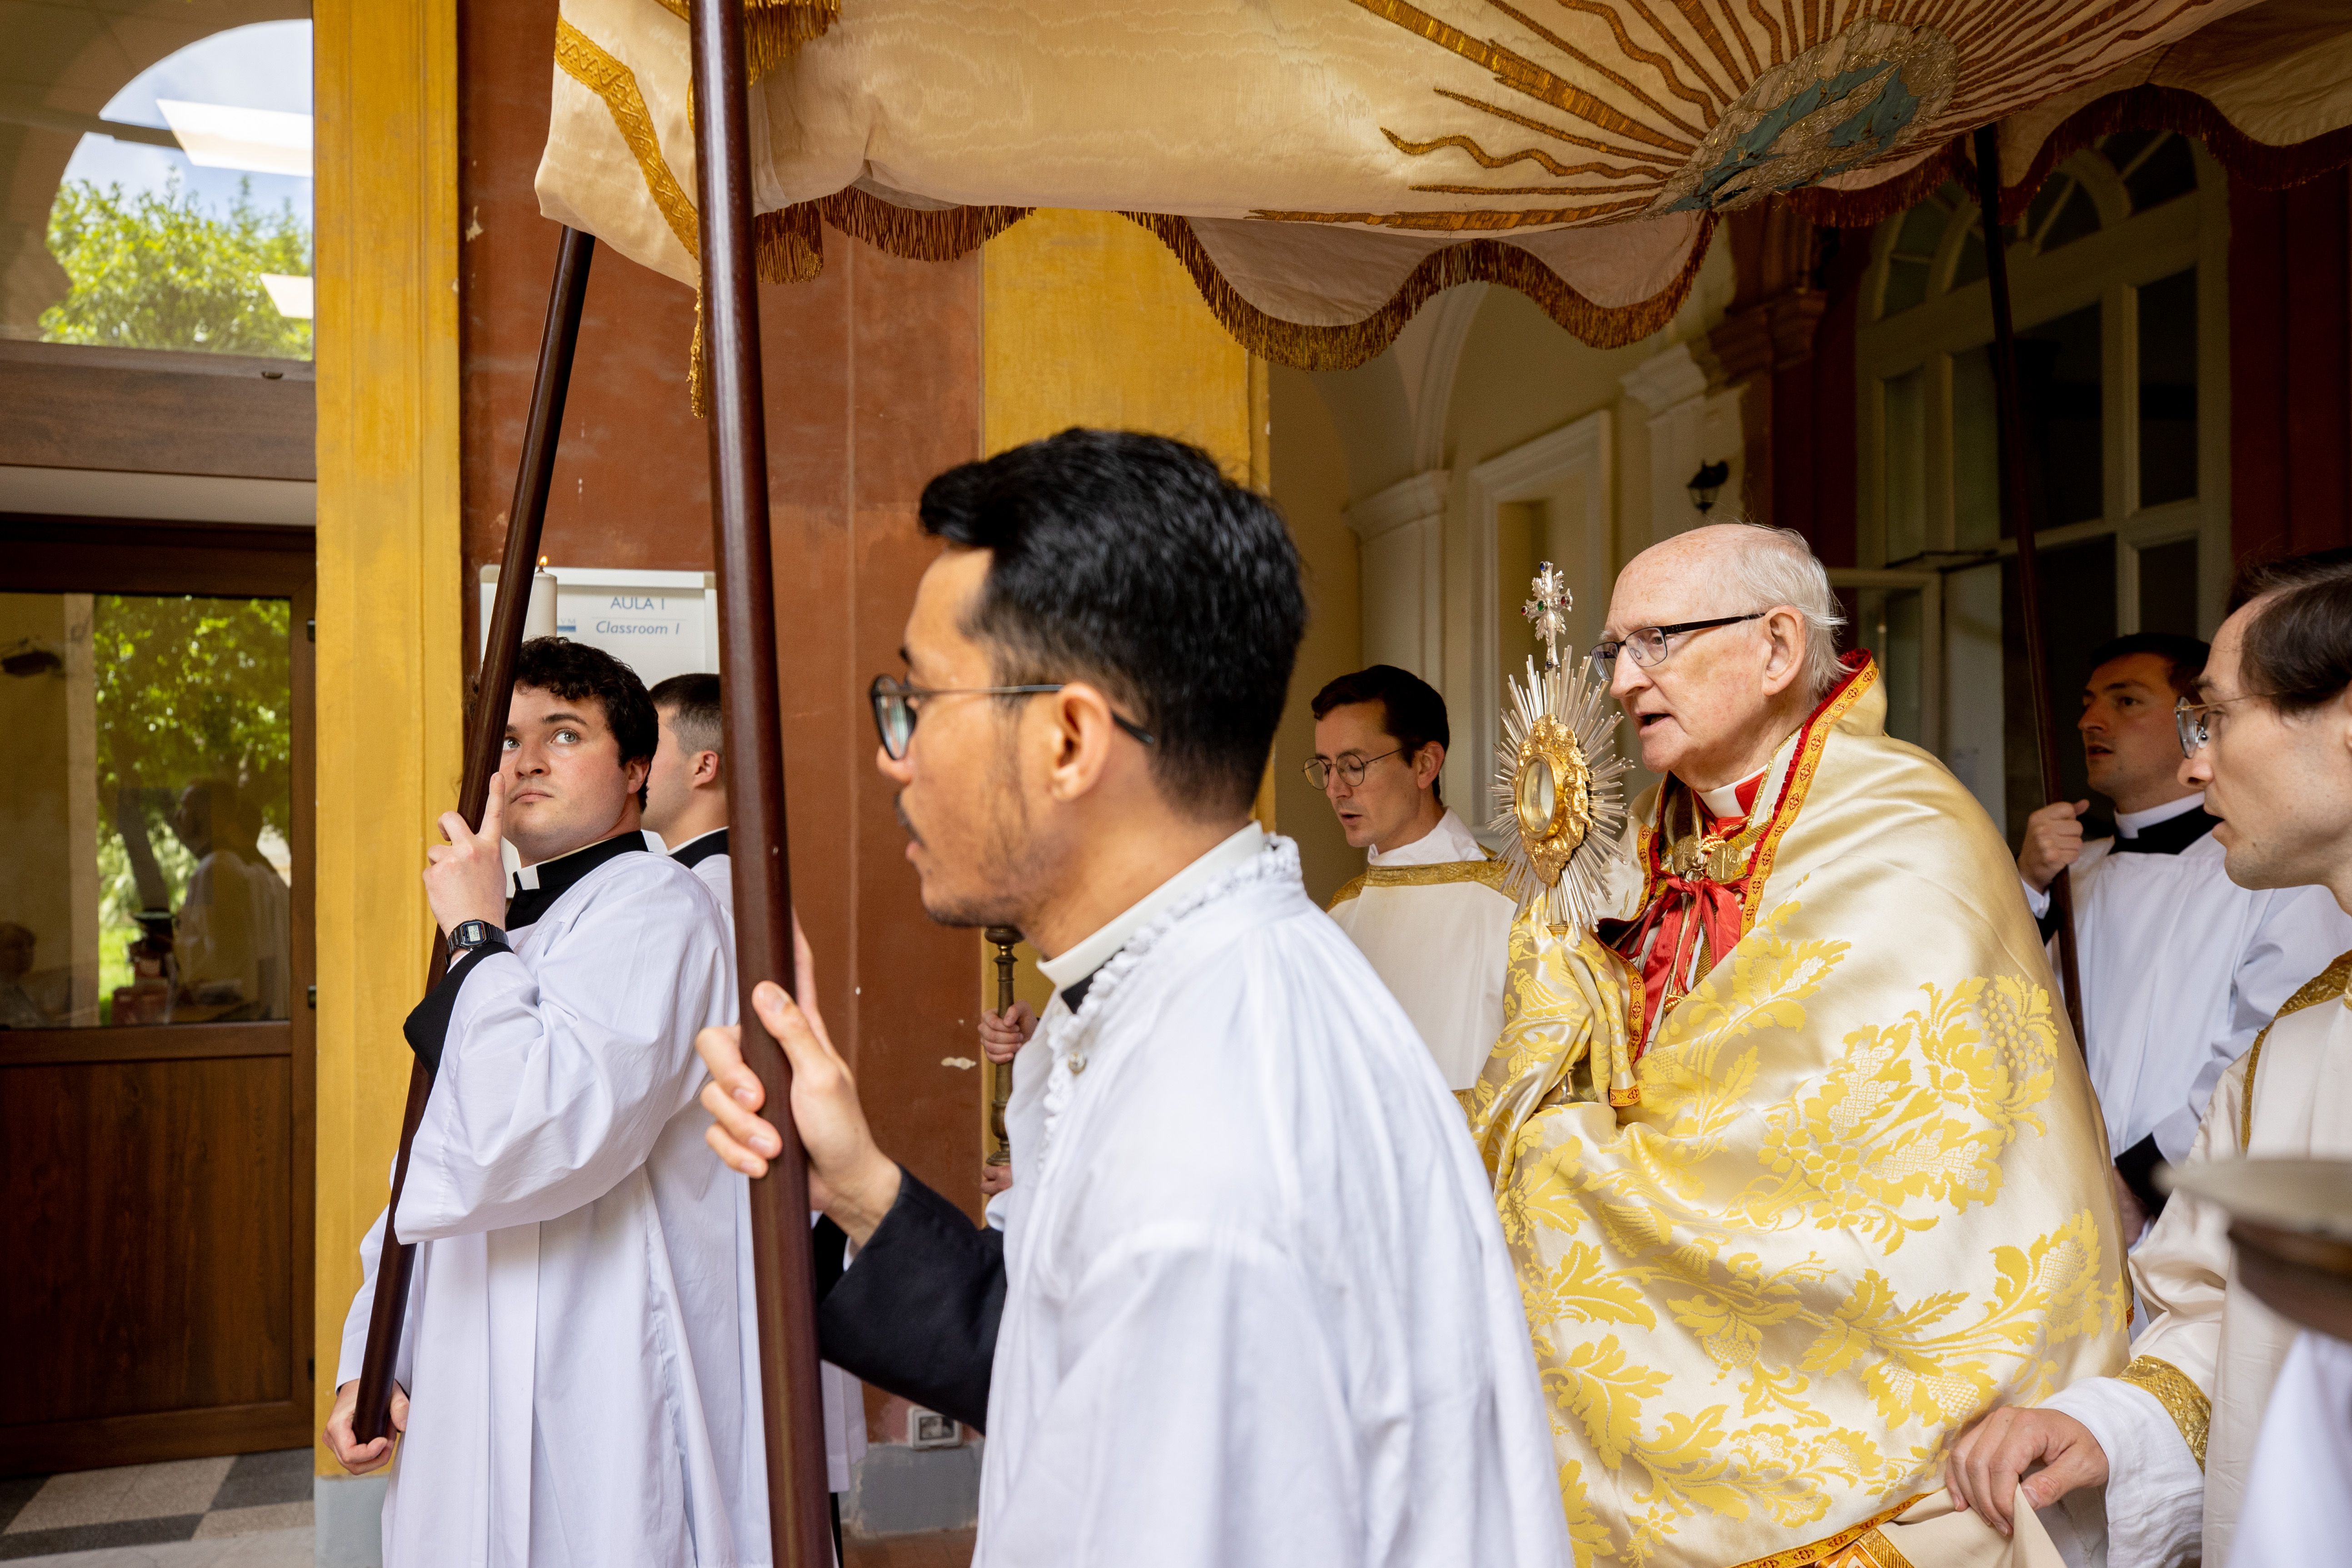 PHOTOS: Eucharistic procession brings Jesus to halls of Rome university